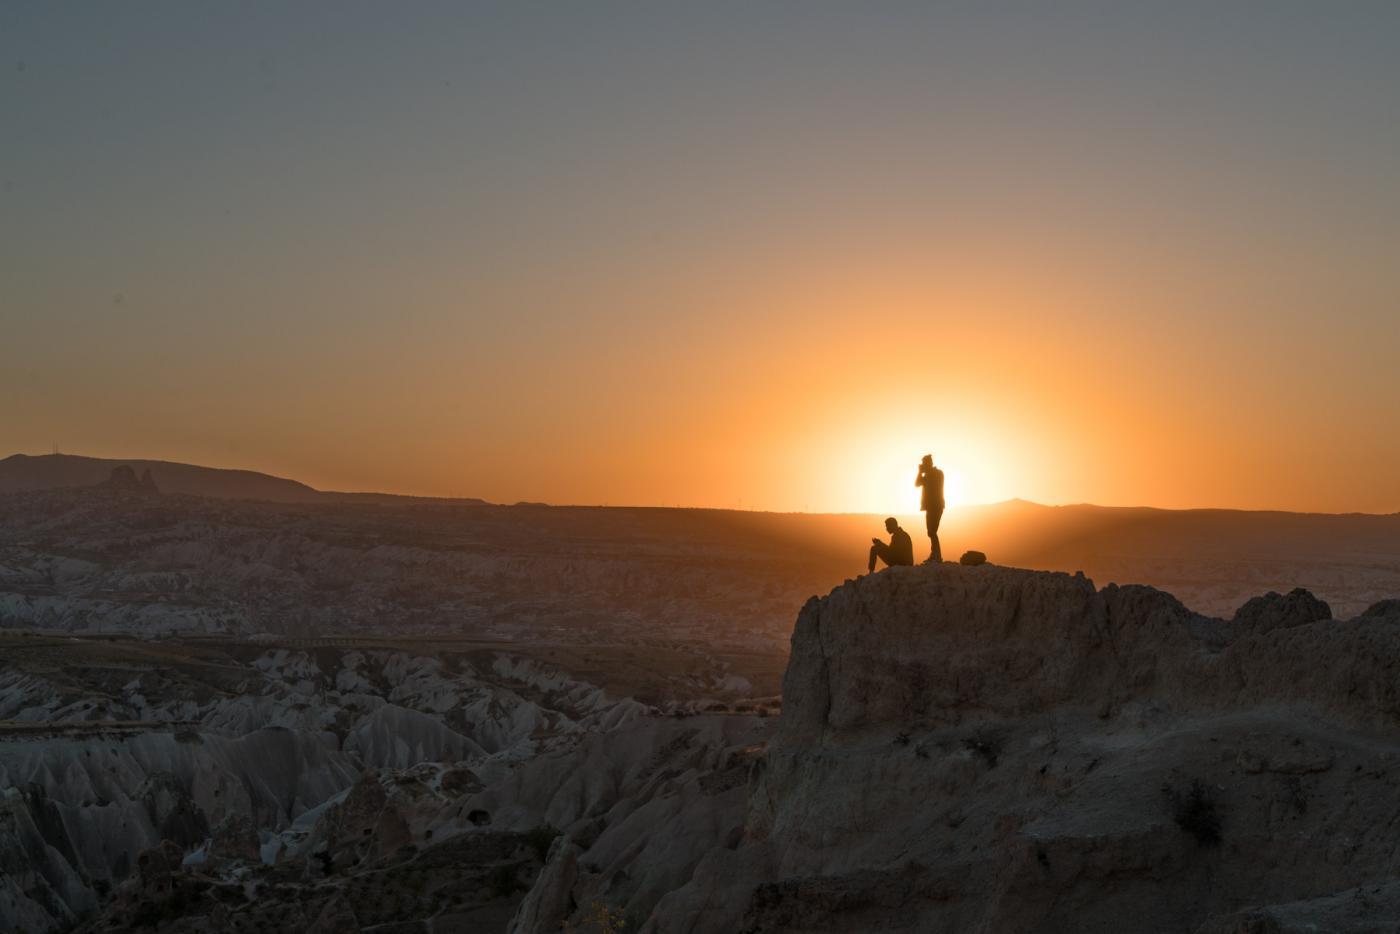 Sunset over Kizilcukur or Kizil çukur valley in Cappadocia, Turkey